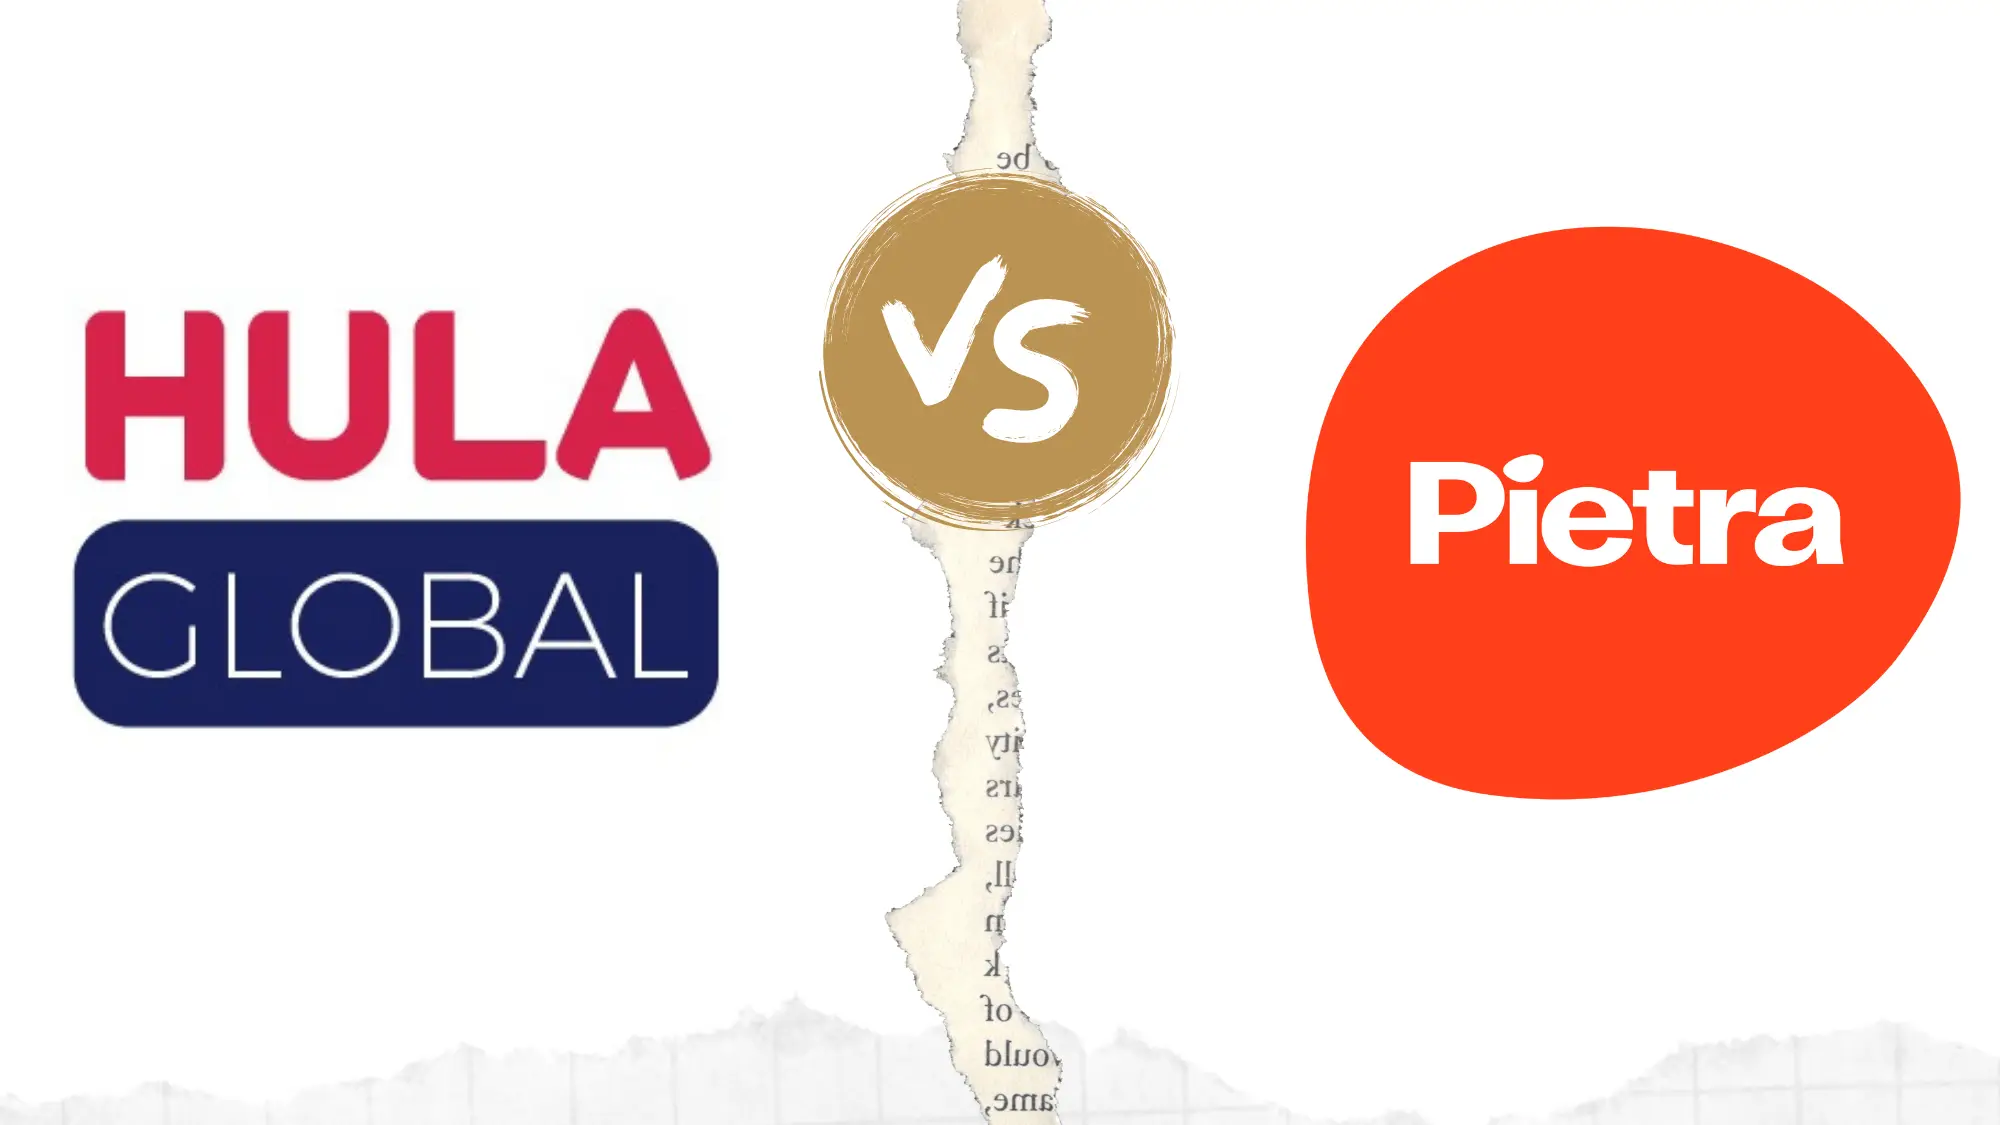 Hula Global vs. pirtra